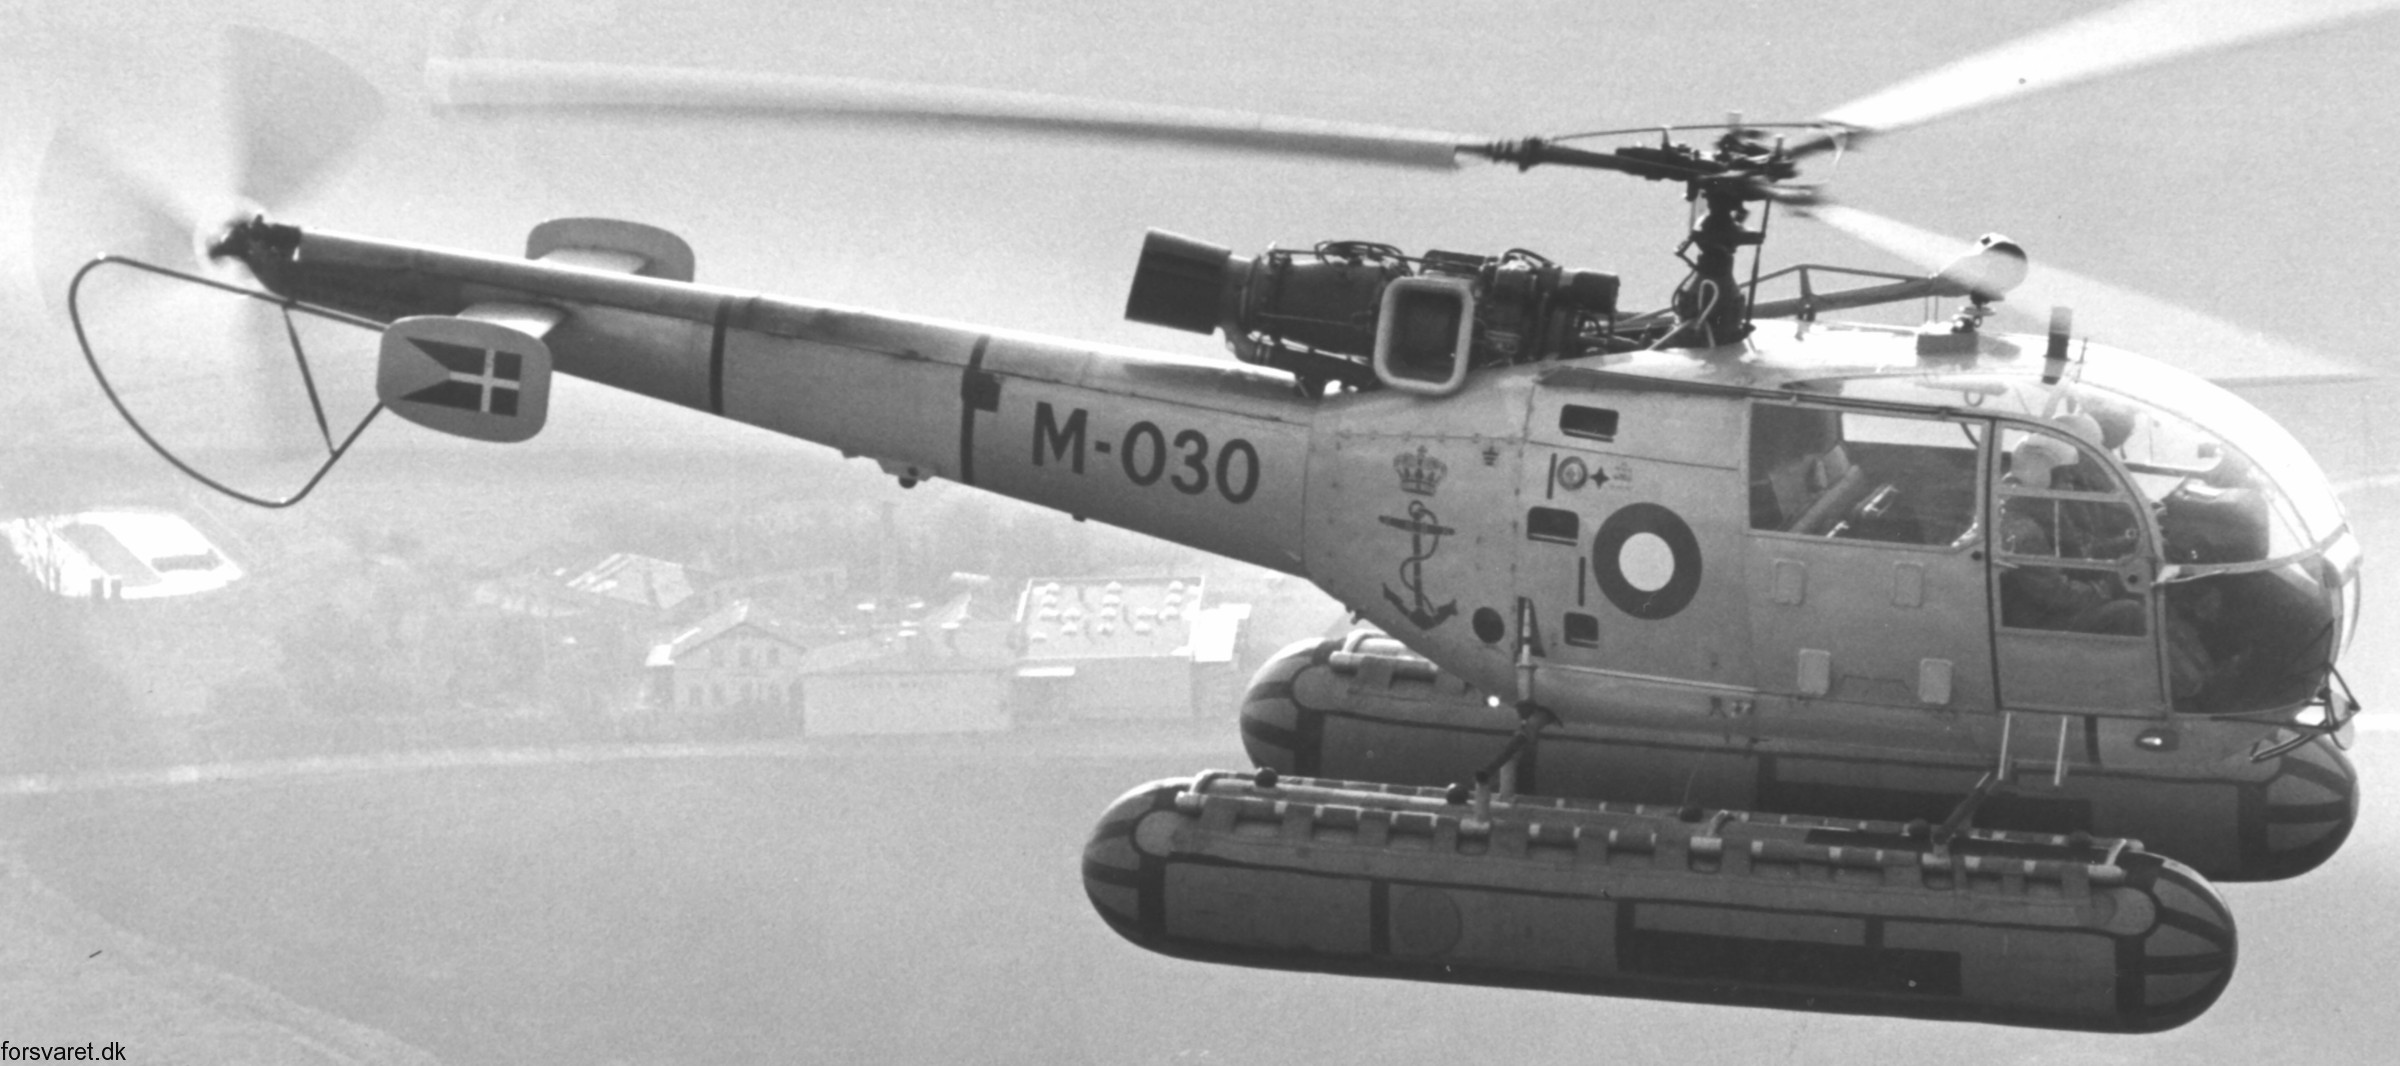 sa 316b alouette iii helicopter royal danish navy søværnet kongelige danske marine sud aviation m-030 08